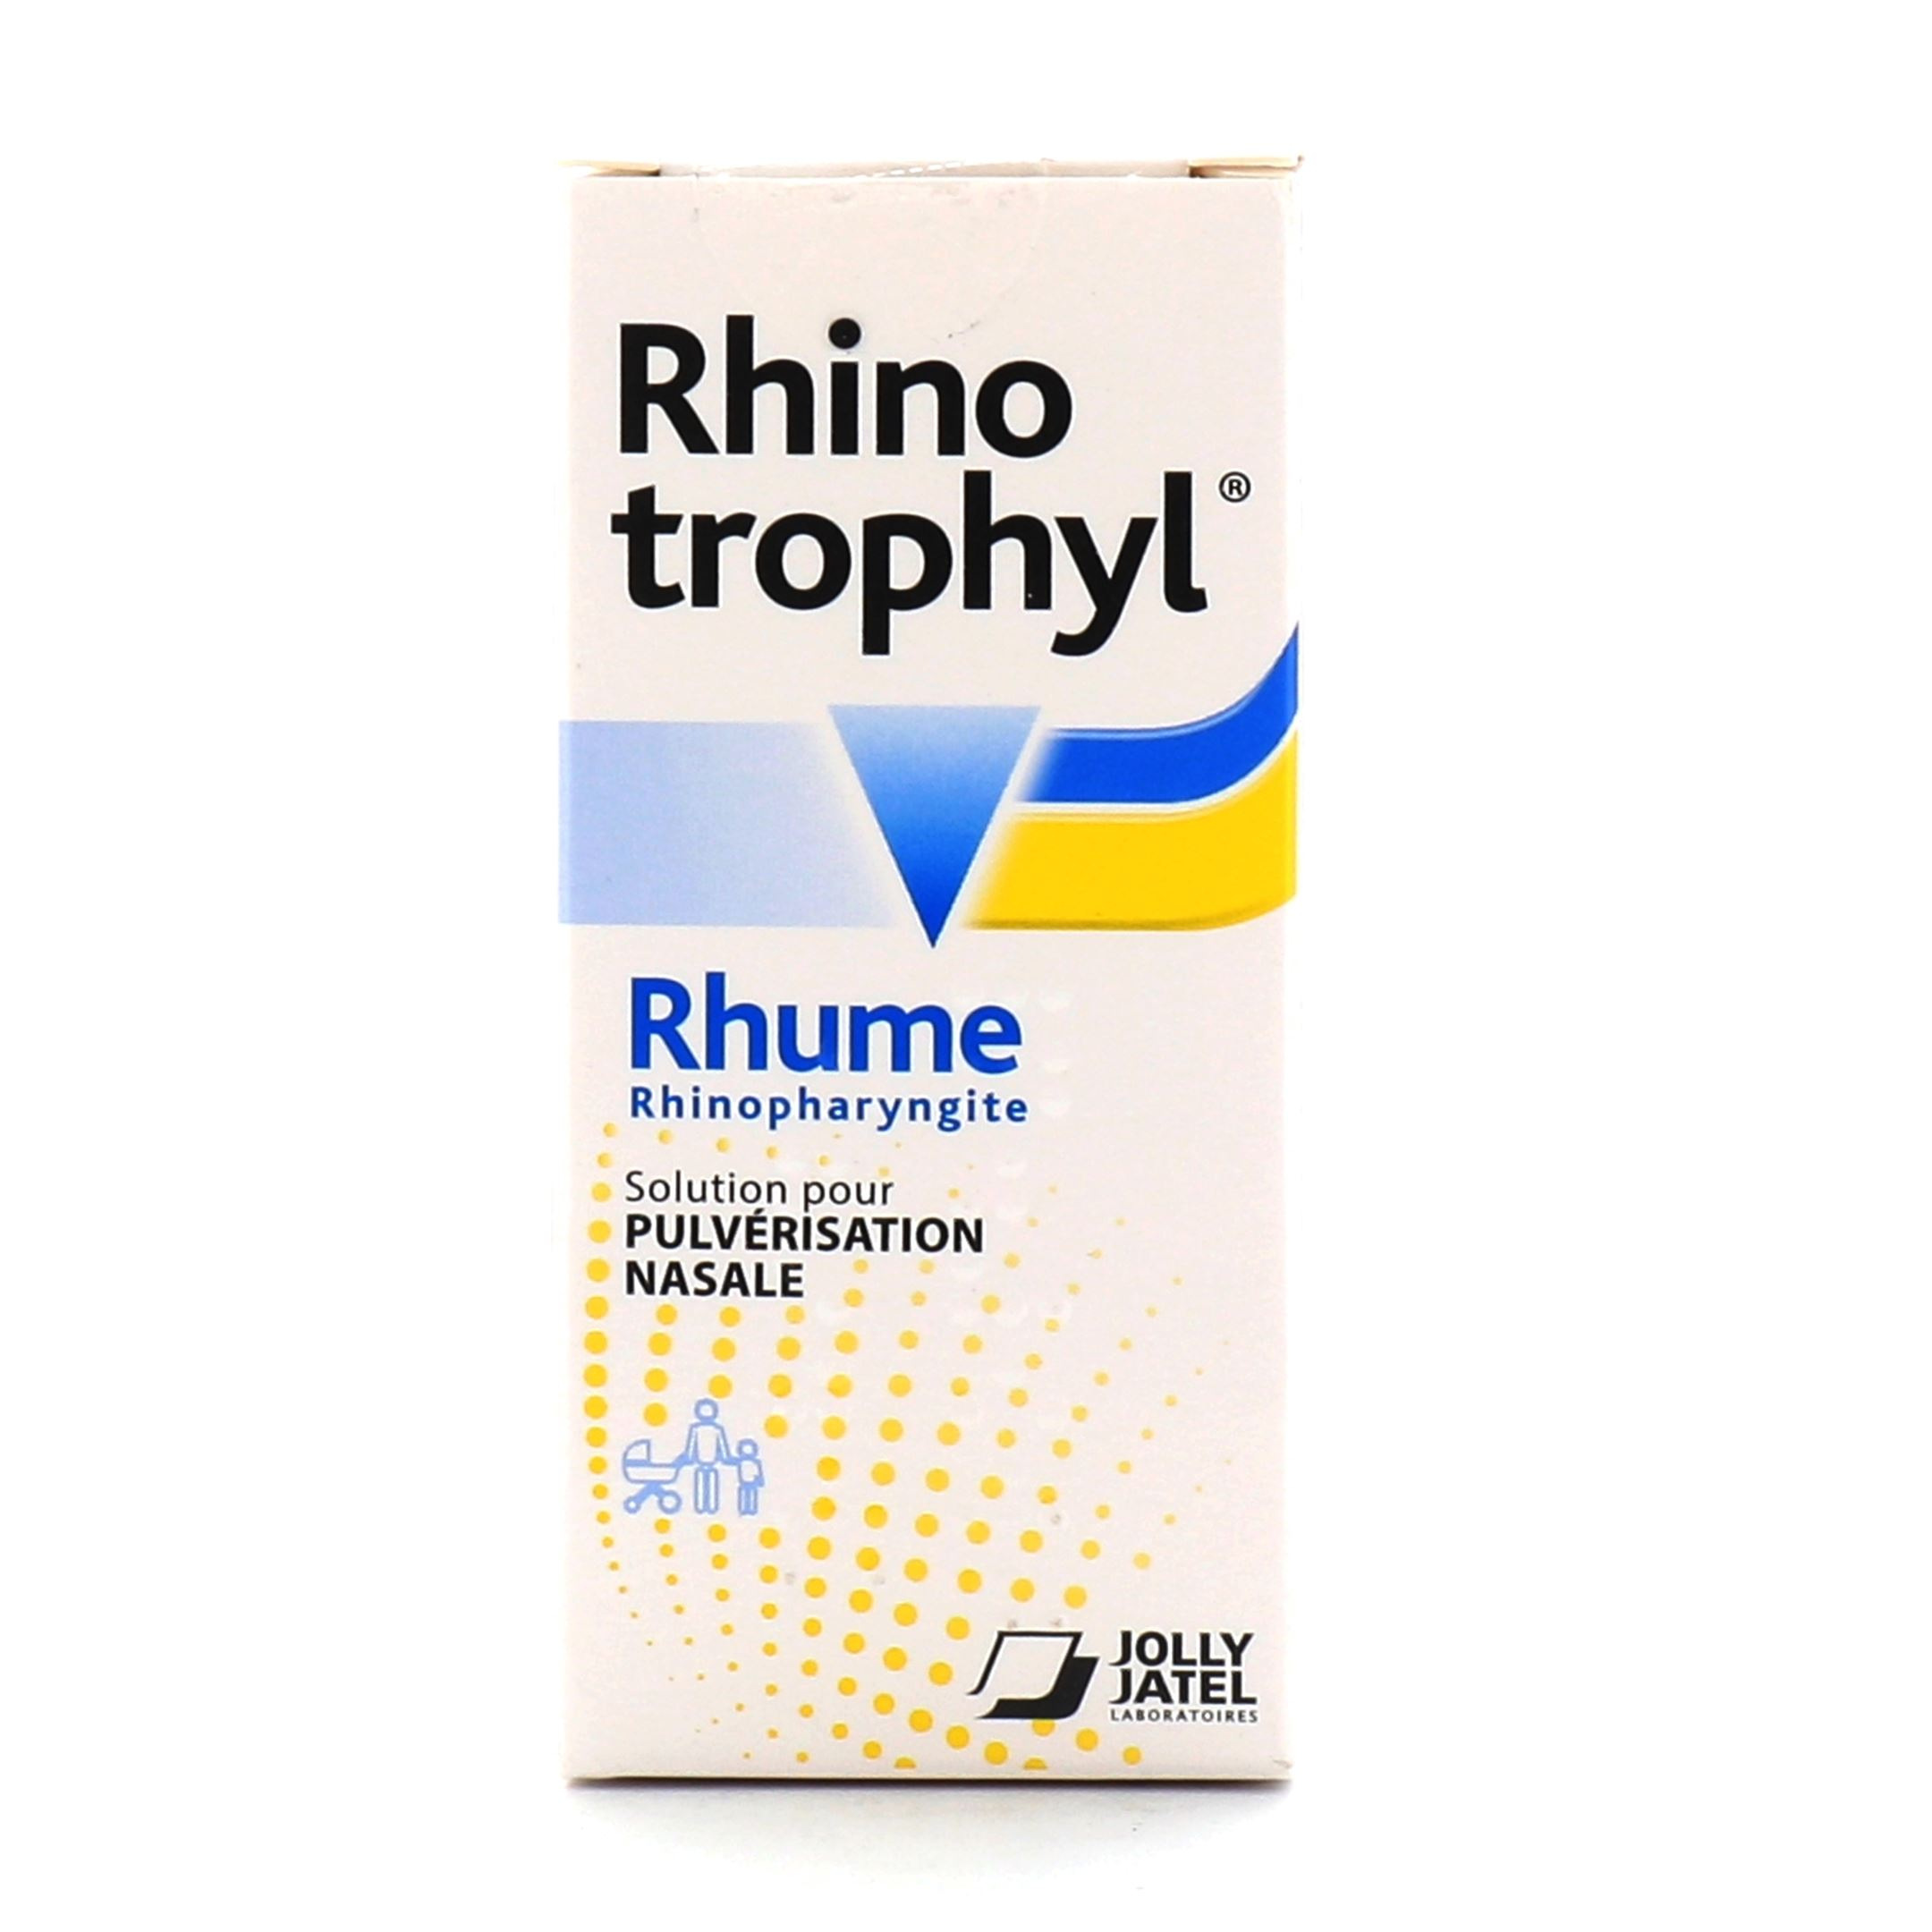 Rhinotrophyl Rhume Solution nasale - Pharmacie des Drakkars